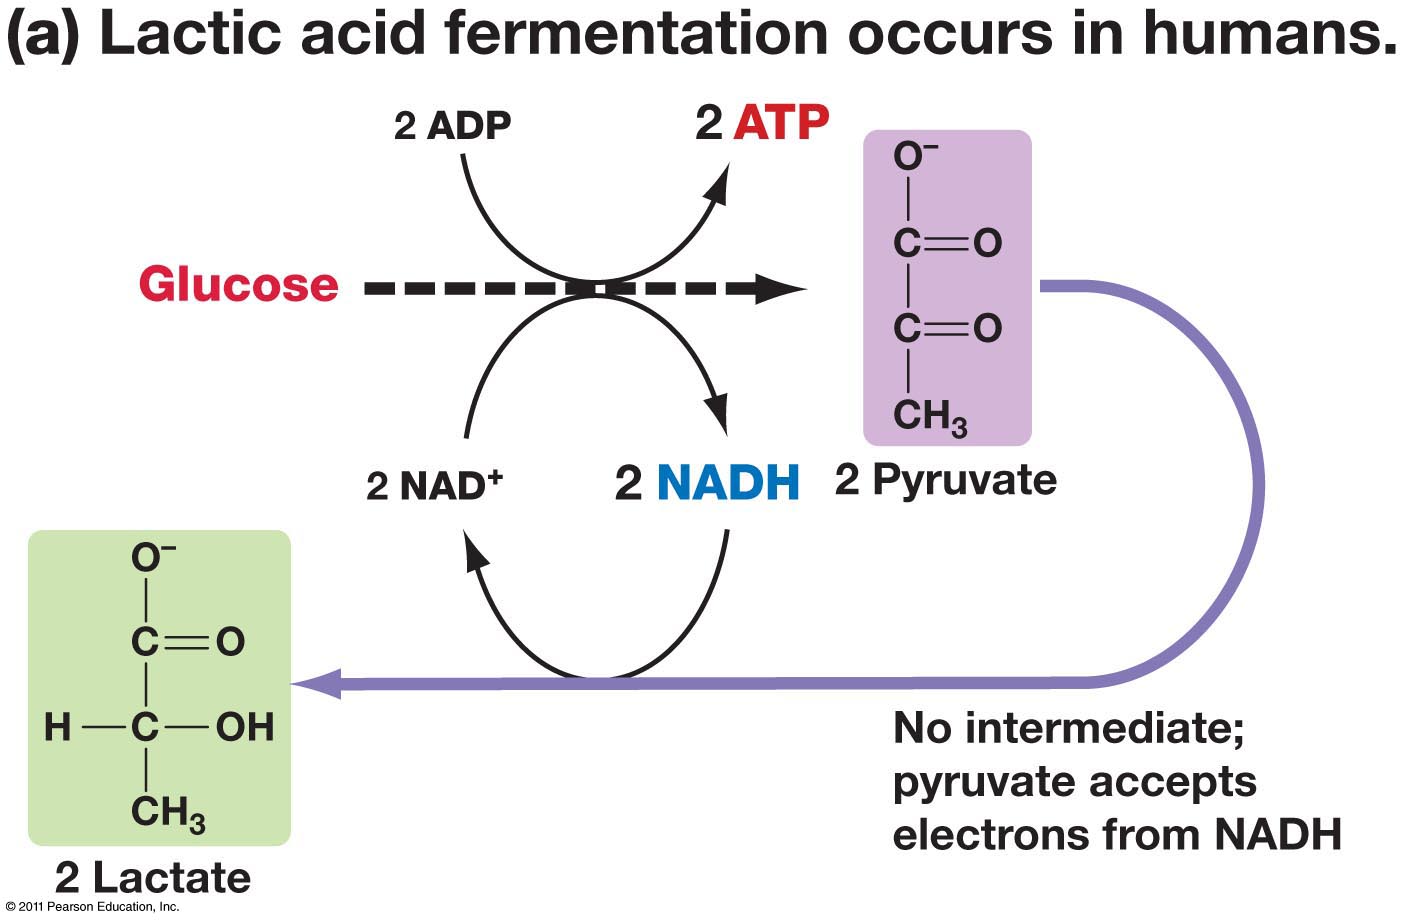 lactic acid fermentation in muscle cells